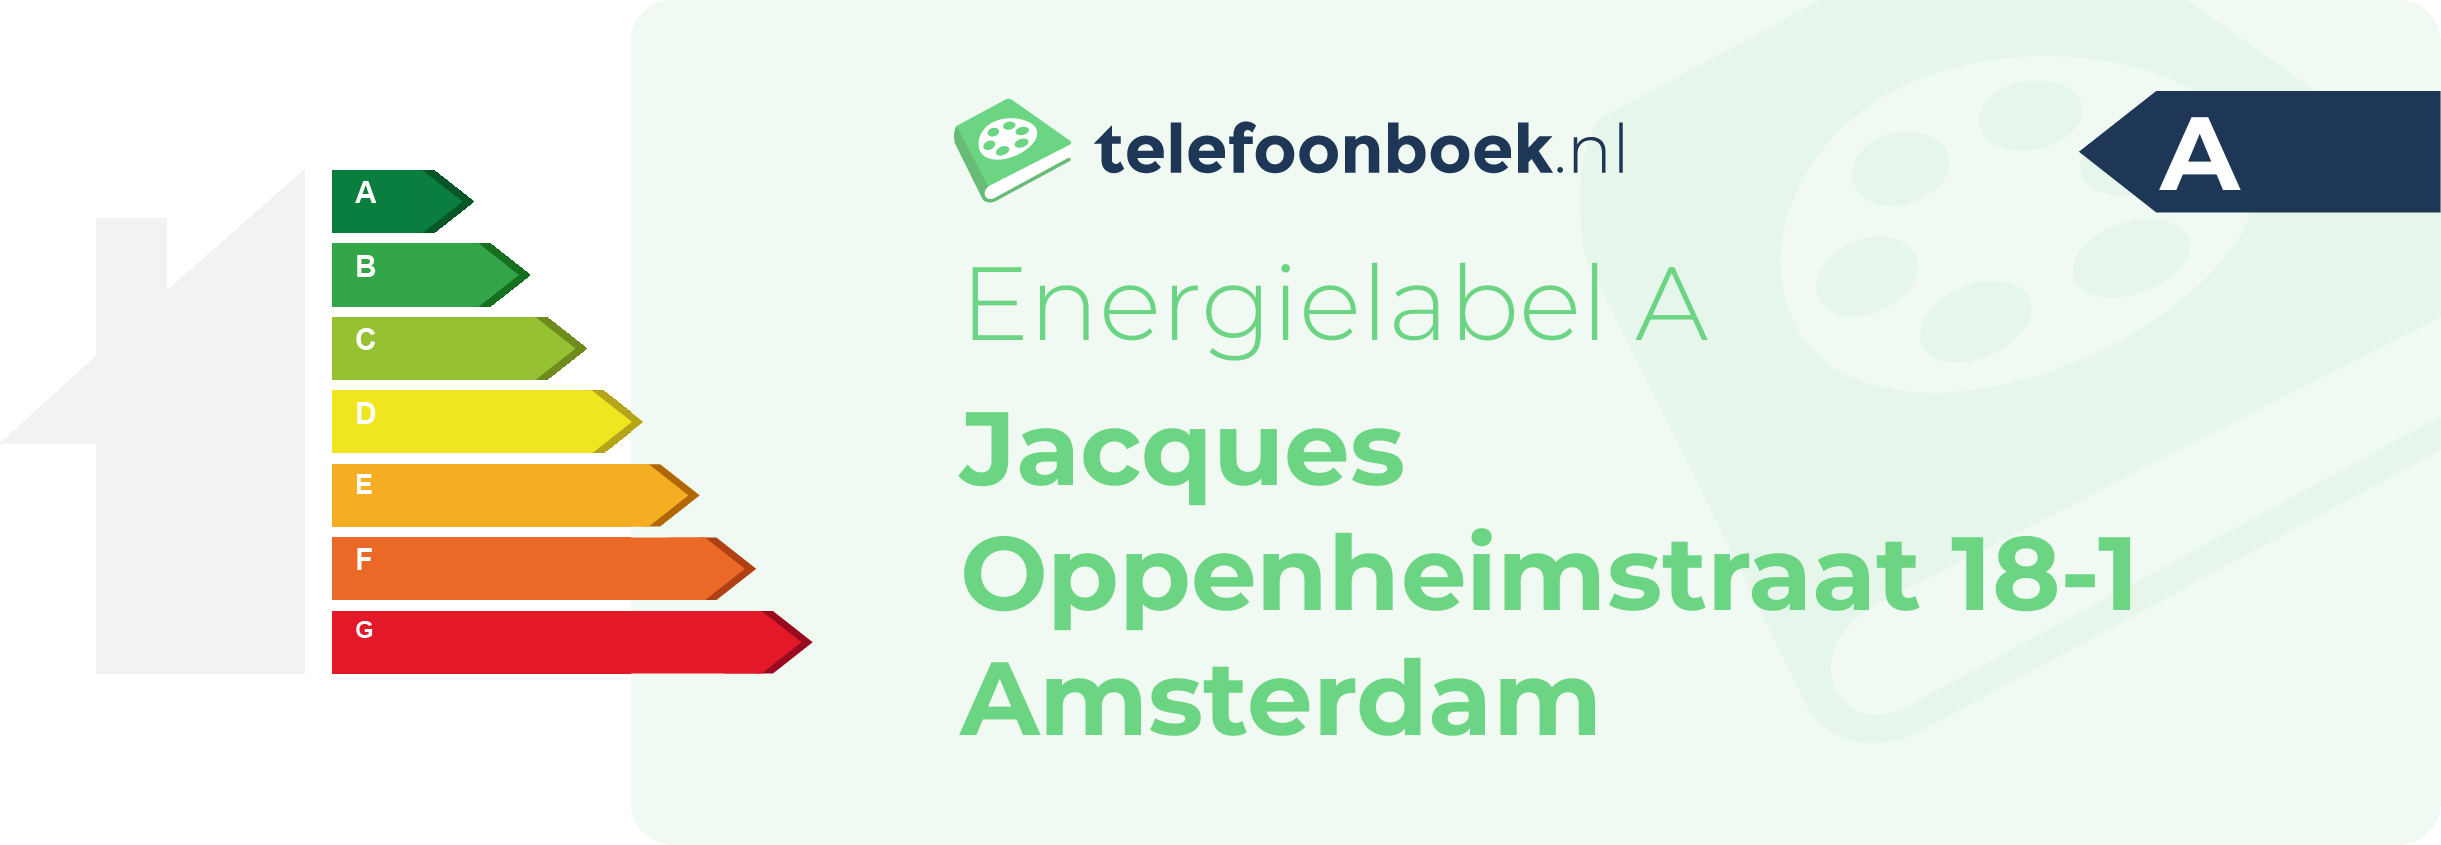 Energielabel Jacques Oppenheimstraat 18-1 Amsterdam